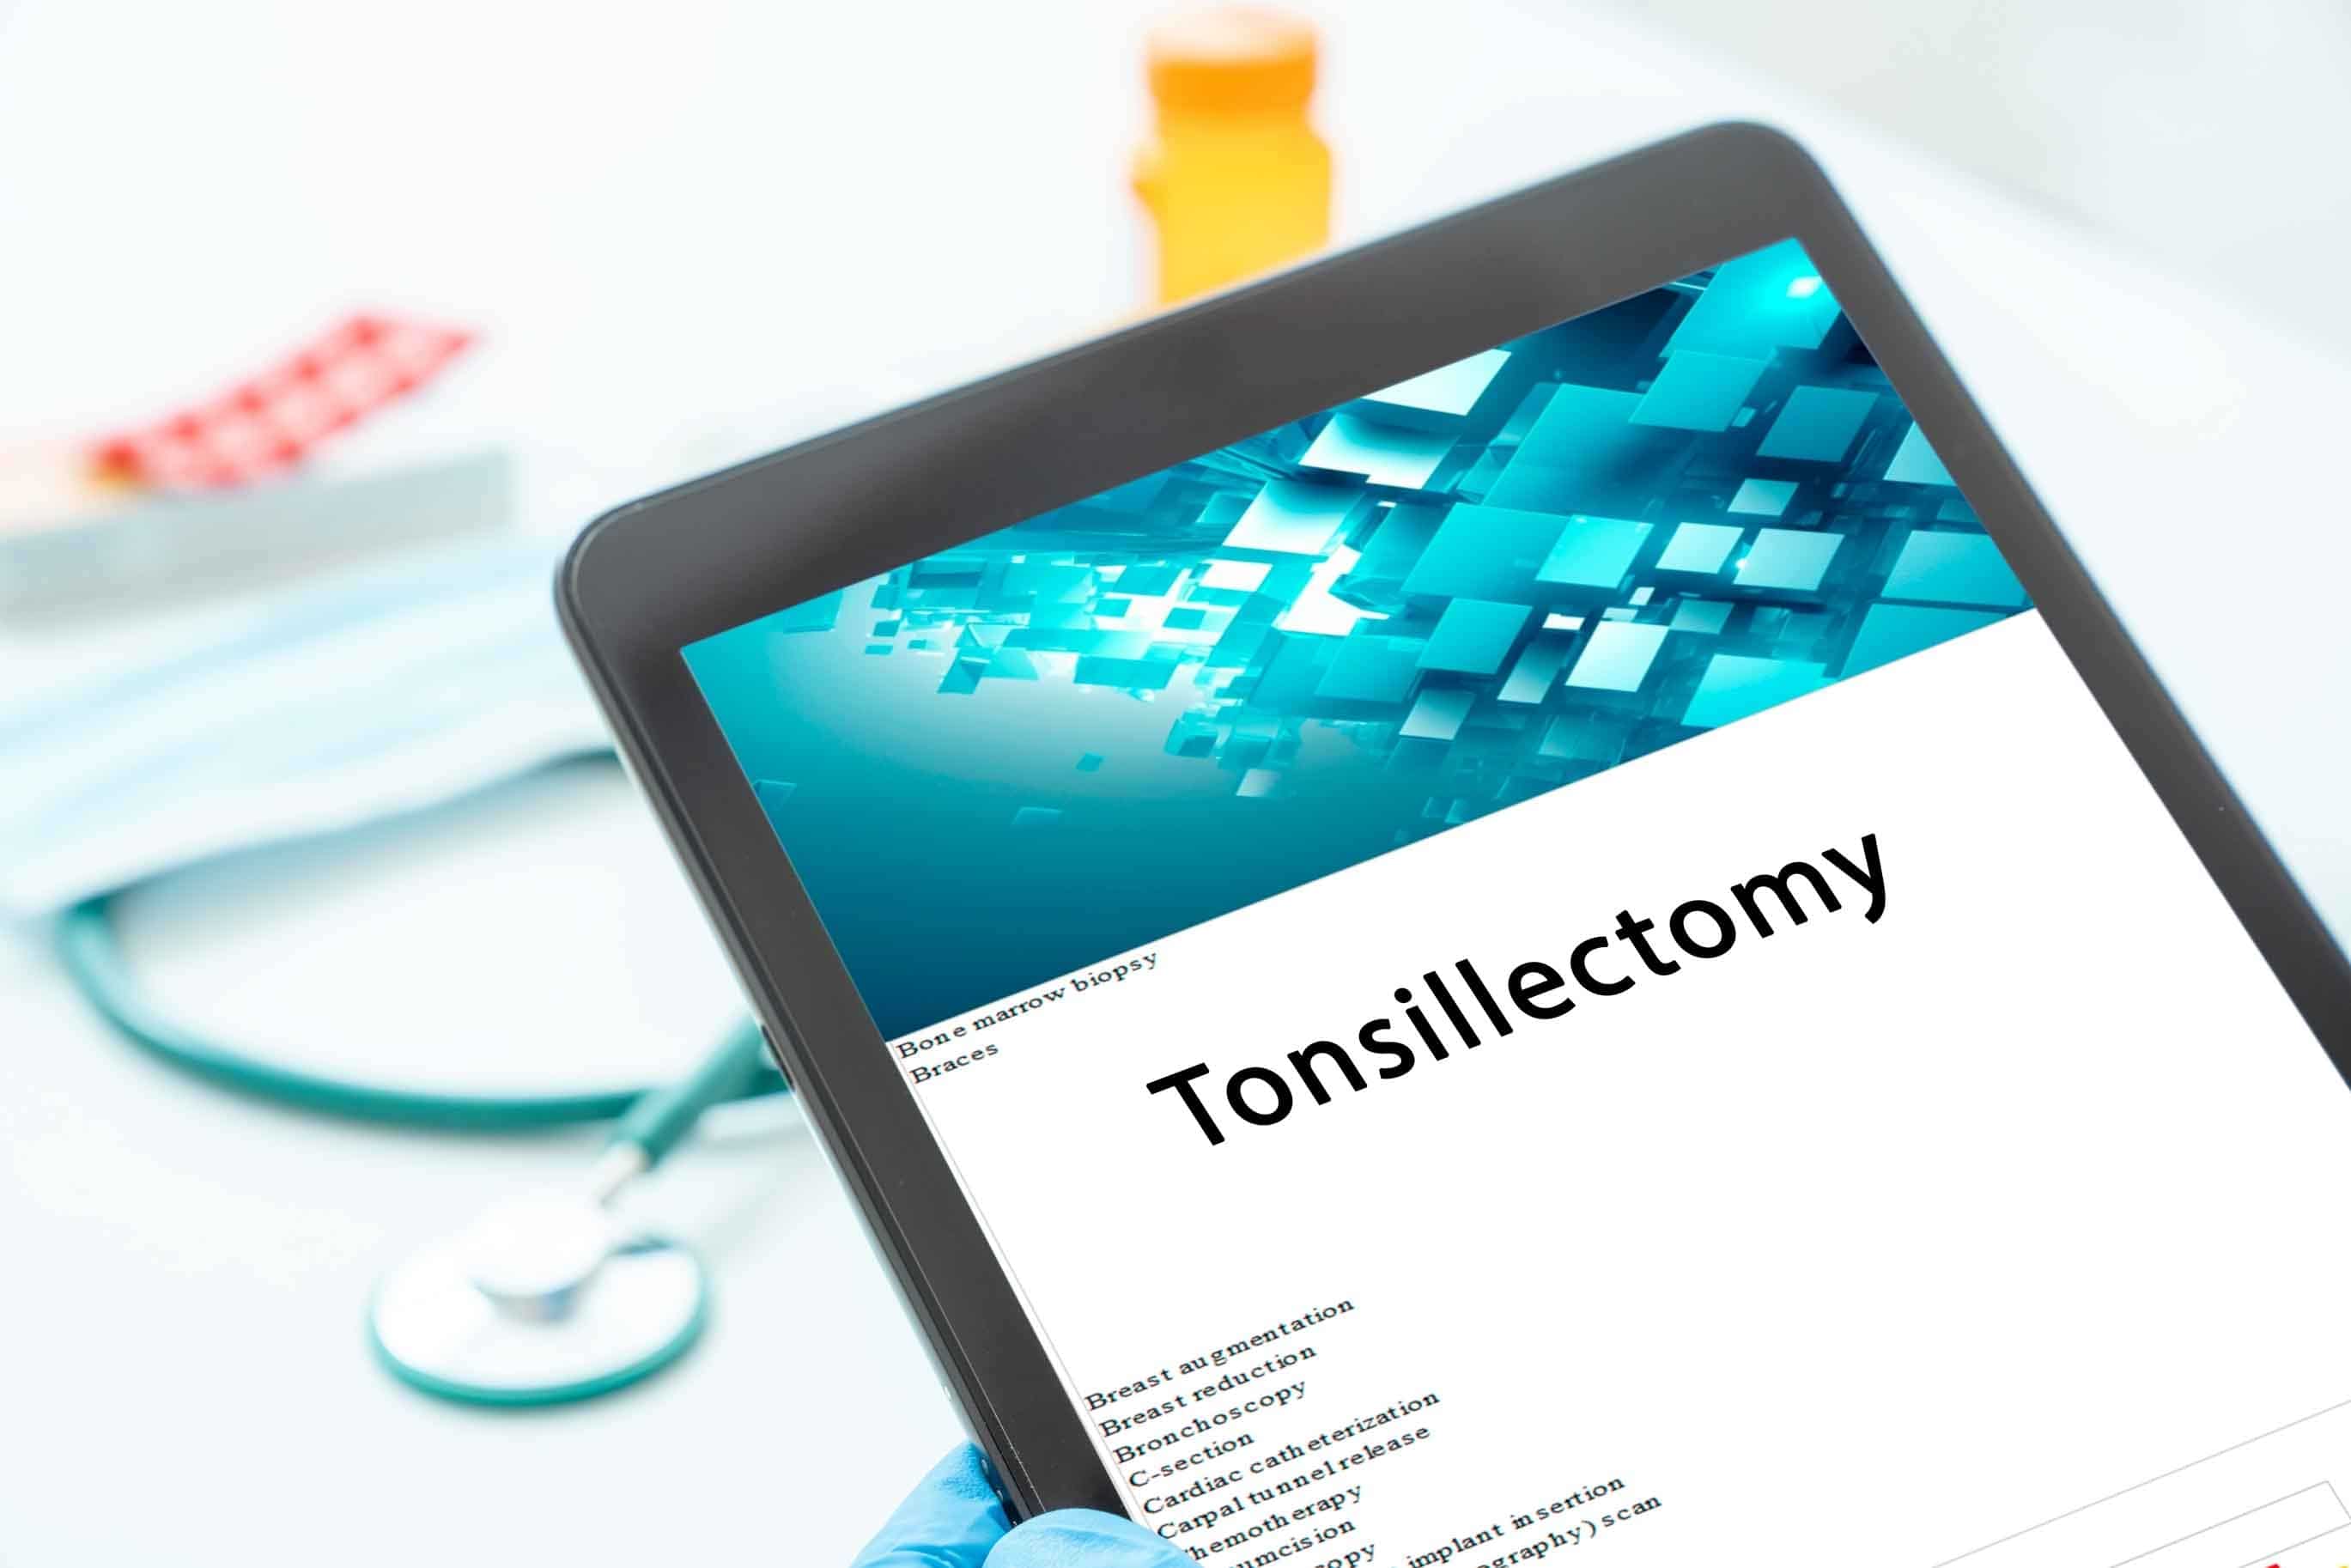 Turkiye tonsillectomy procedure